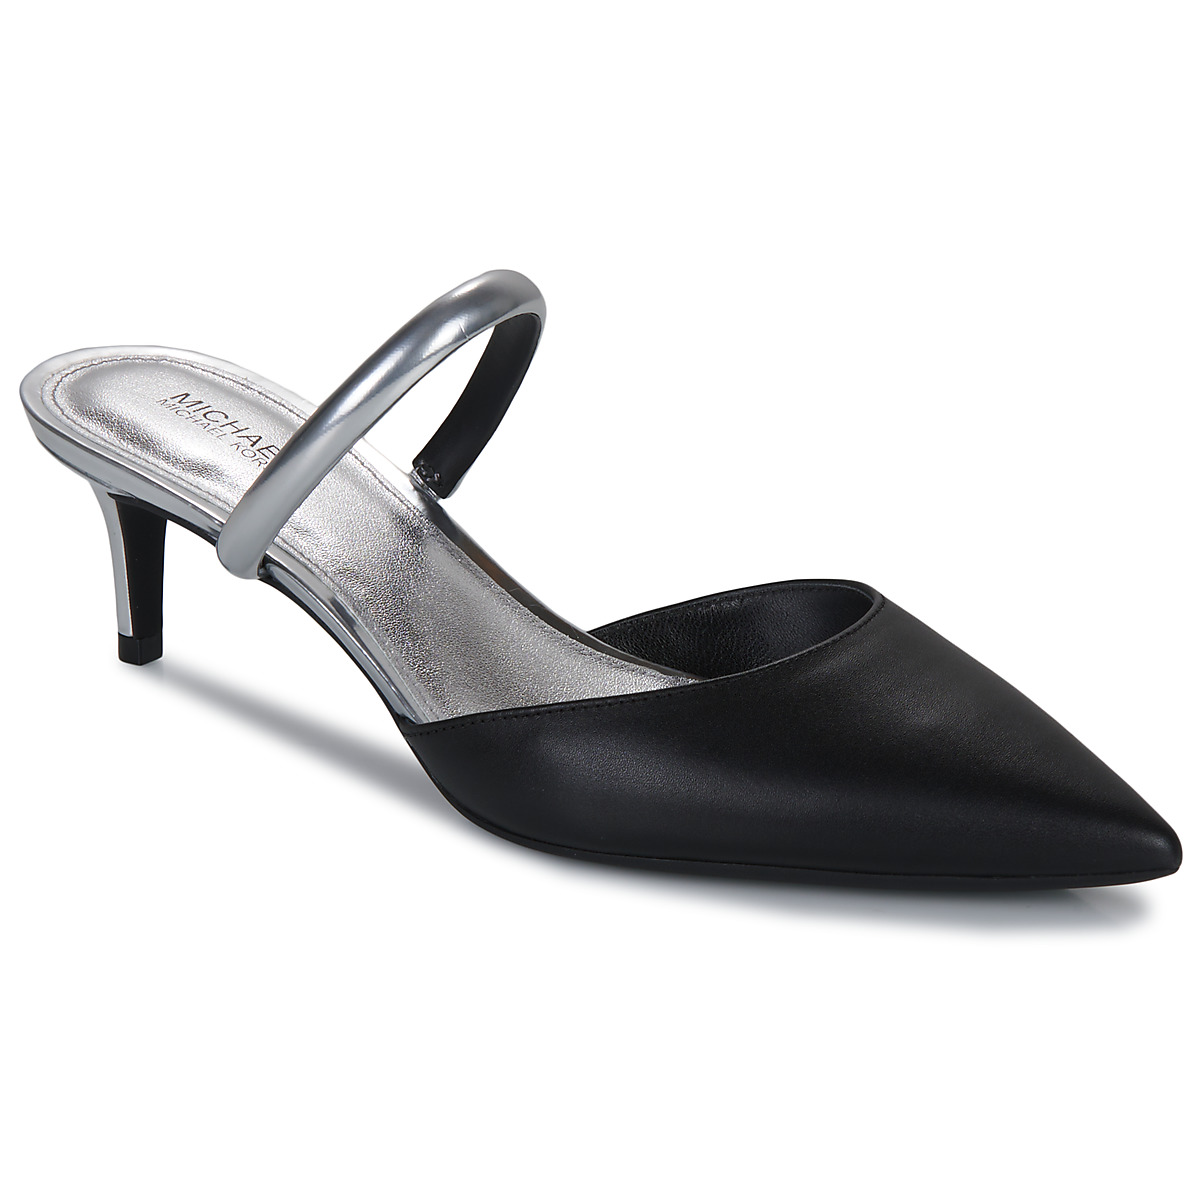 Sapatos Mulher Esgotado - Ver produtos similares JESSA MULE KITTEN Preto / Prata